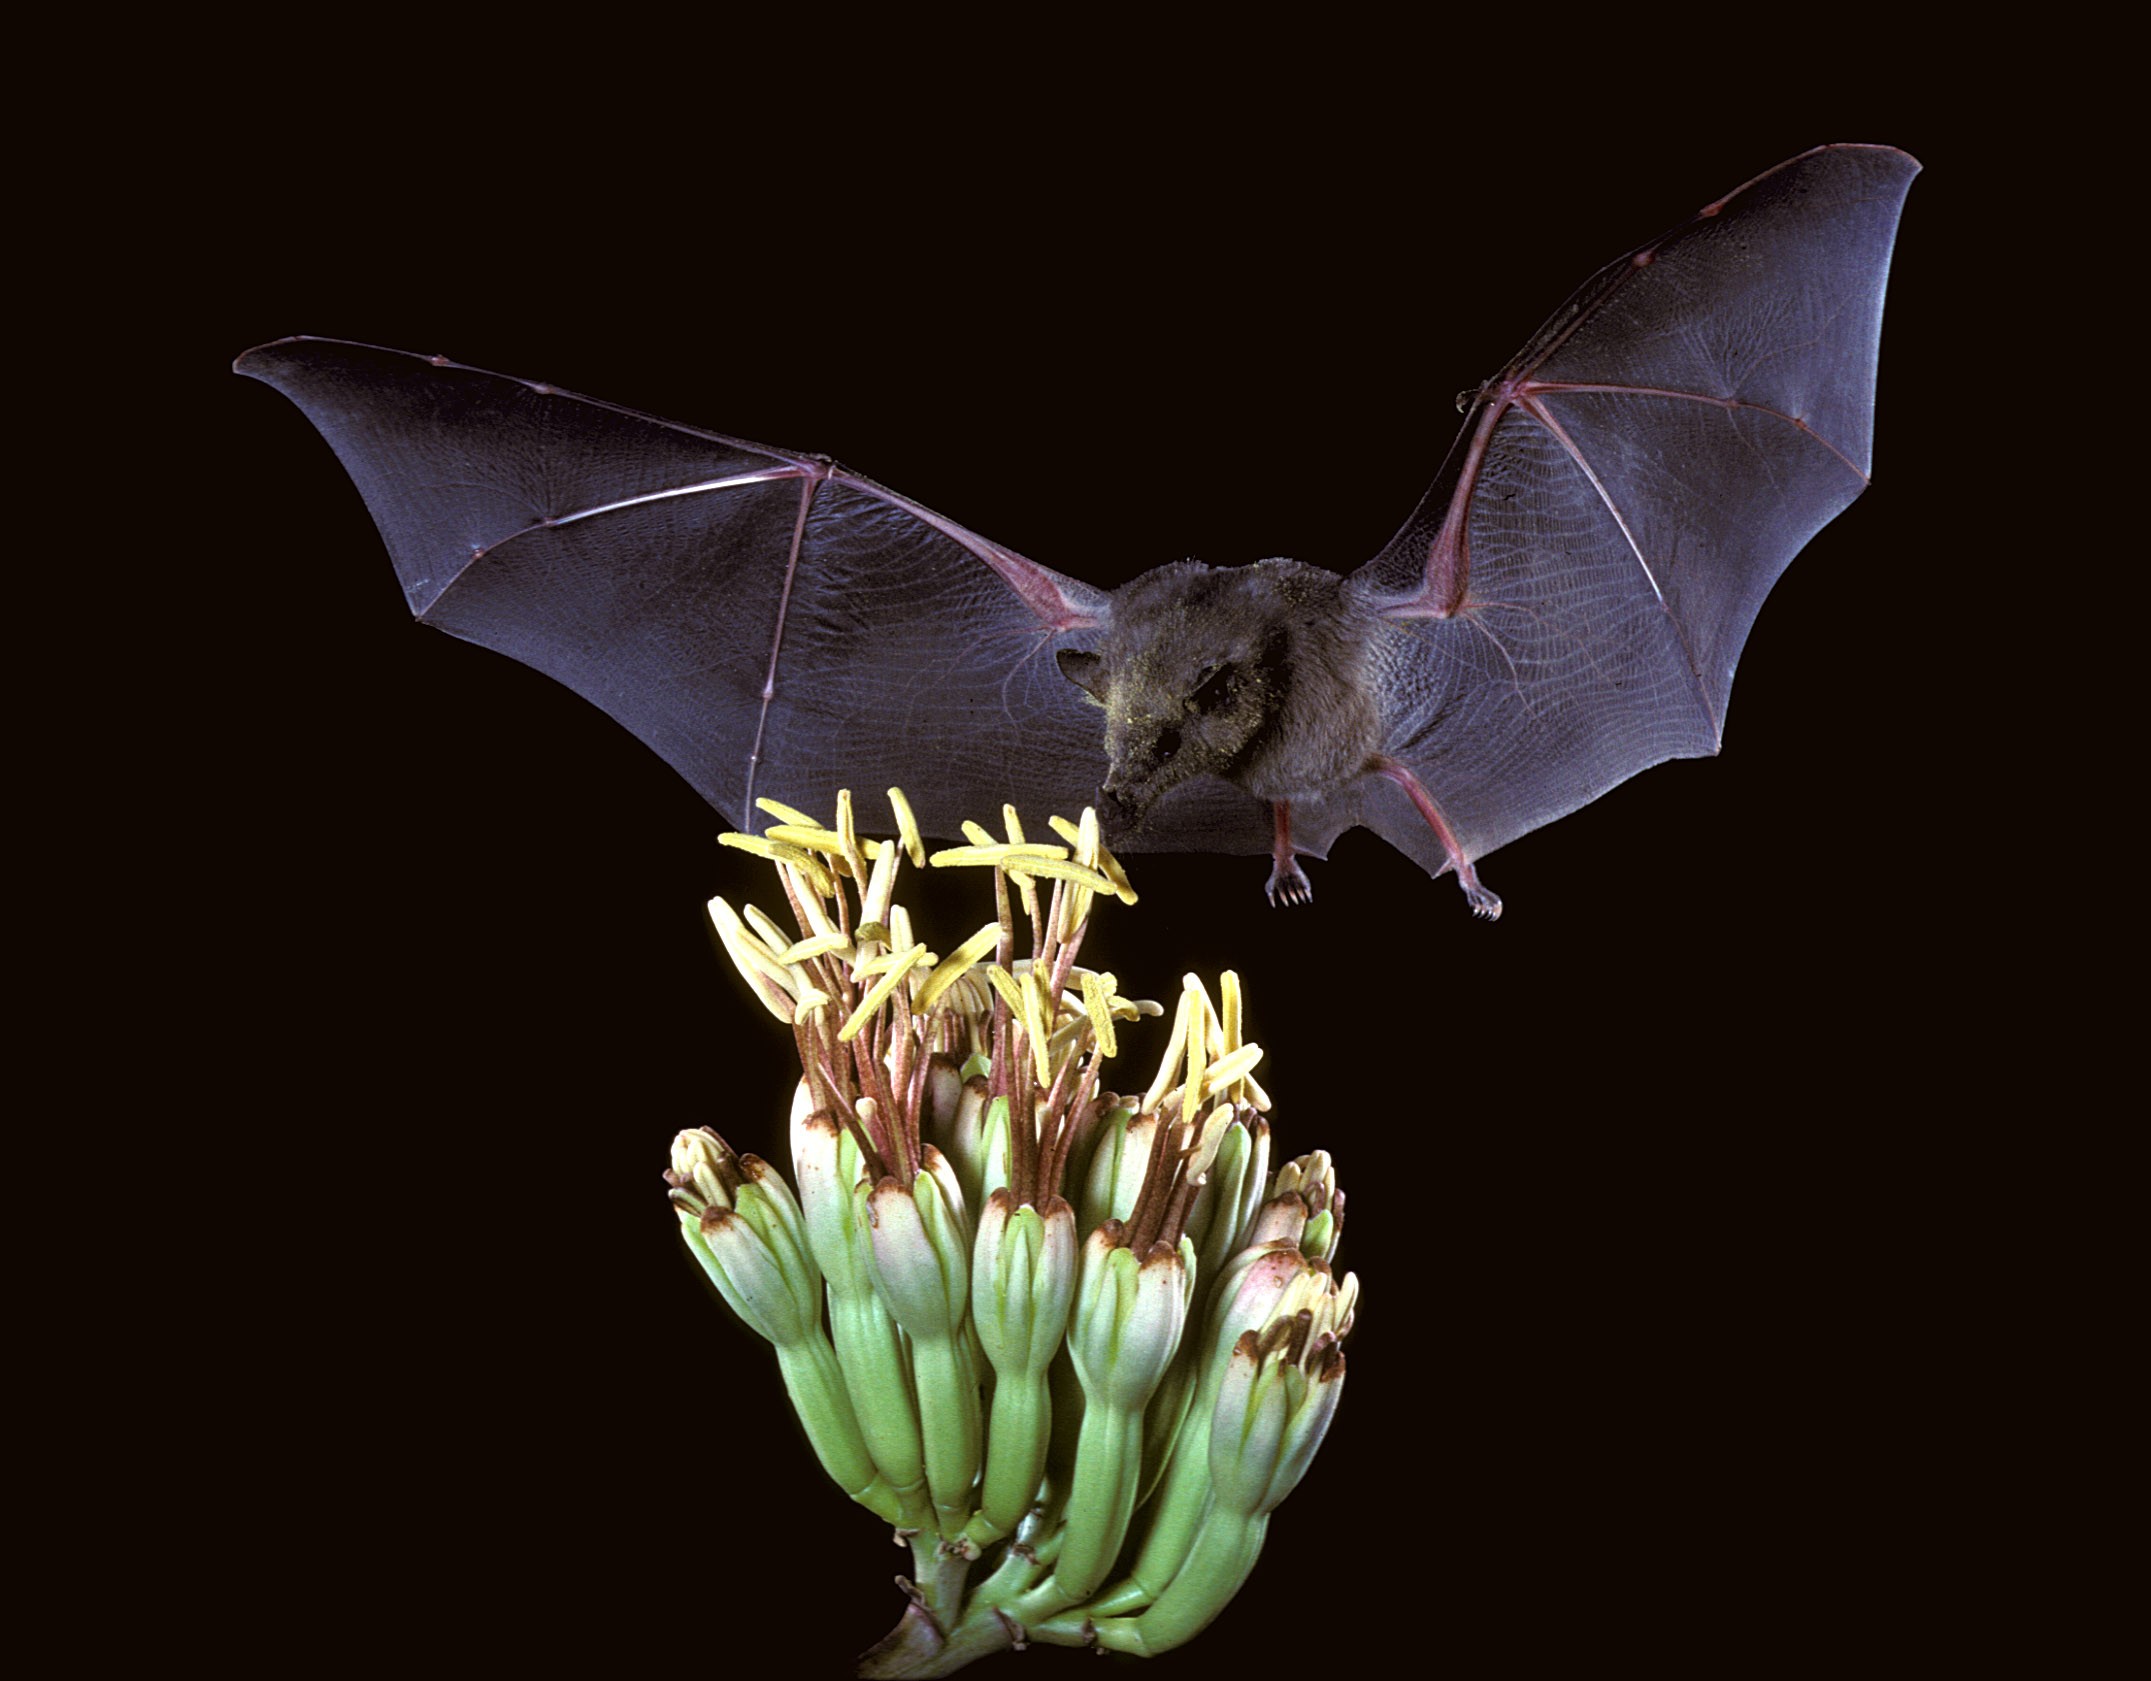 Mexican long-tongued bat (Choeronycteris mexicana) drinking from a cactus. Image: USFWS